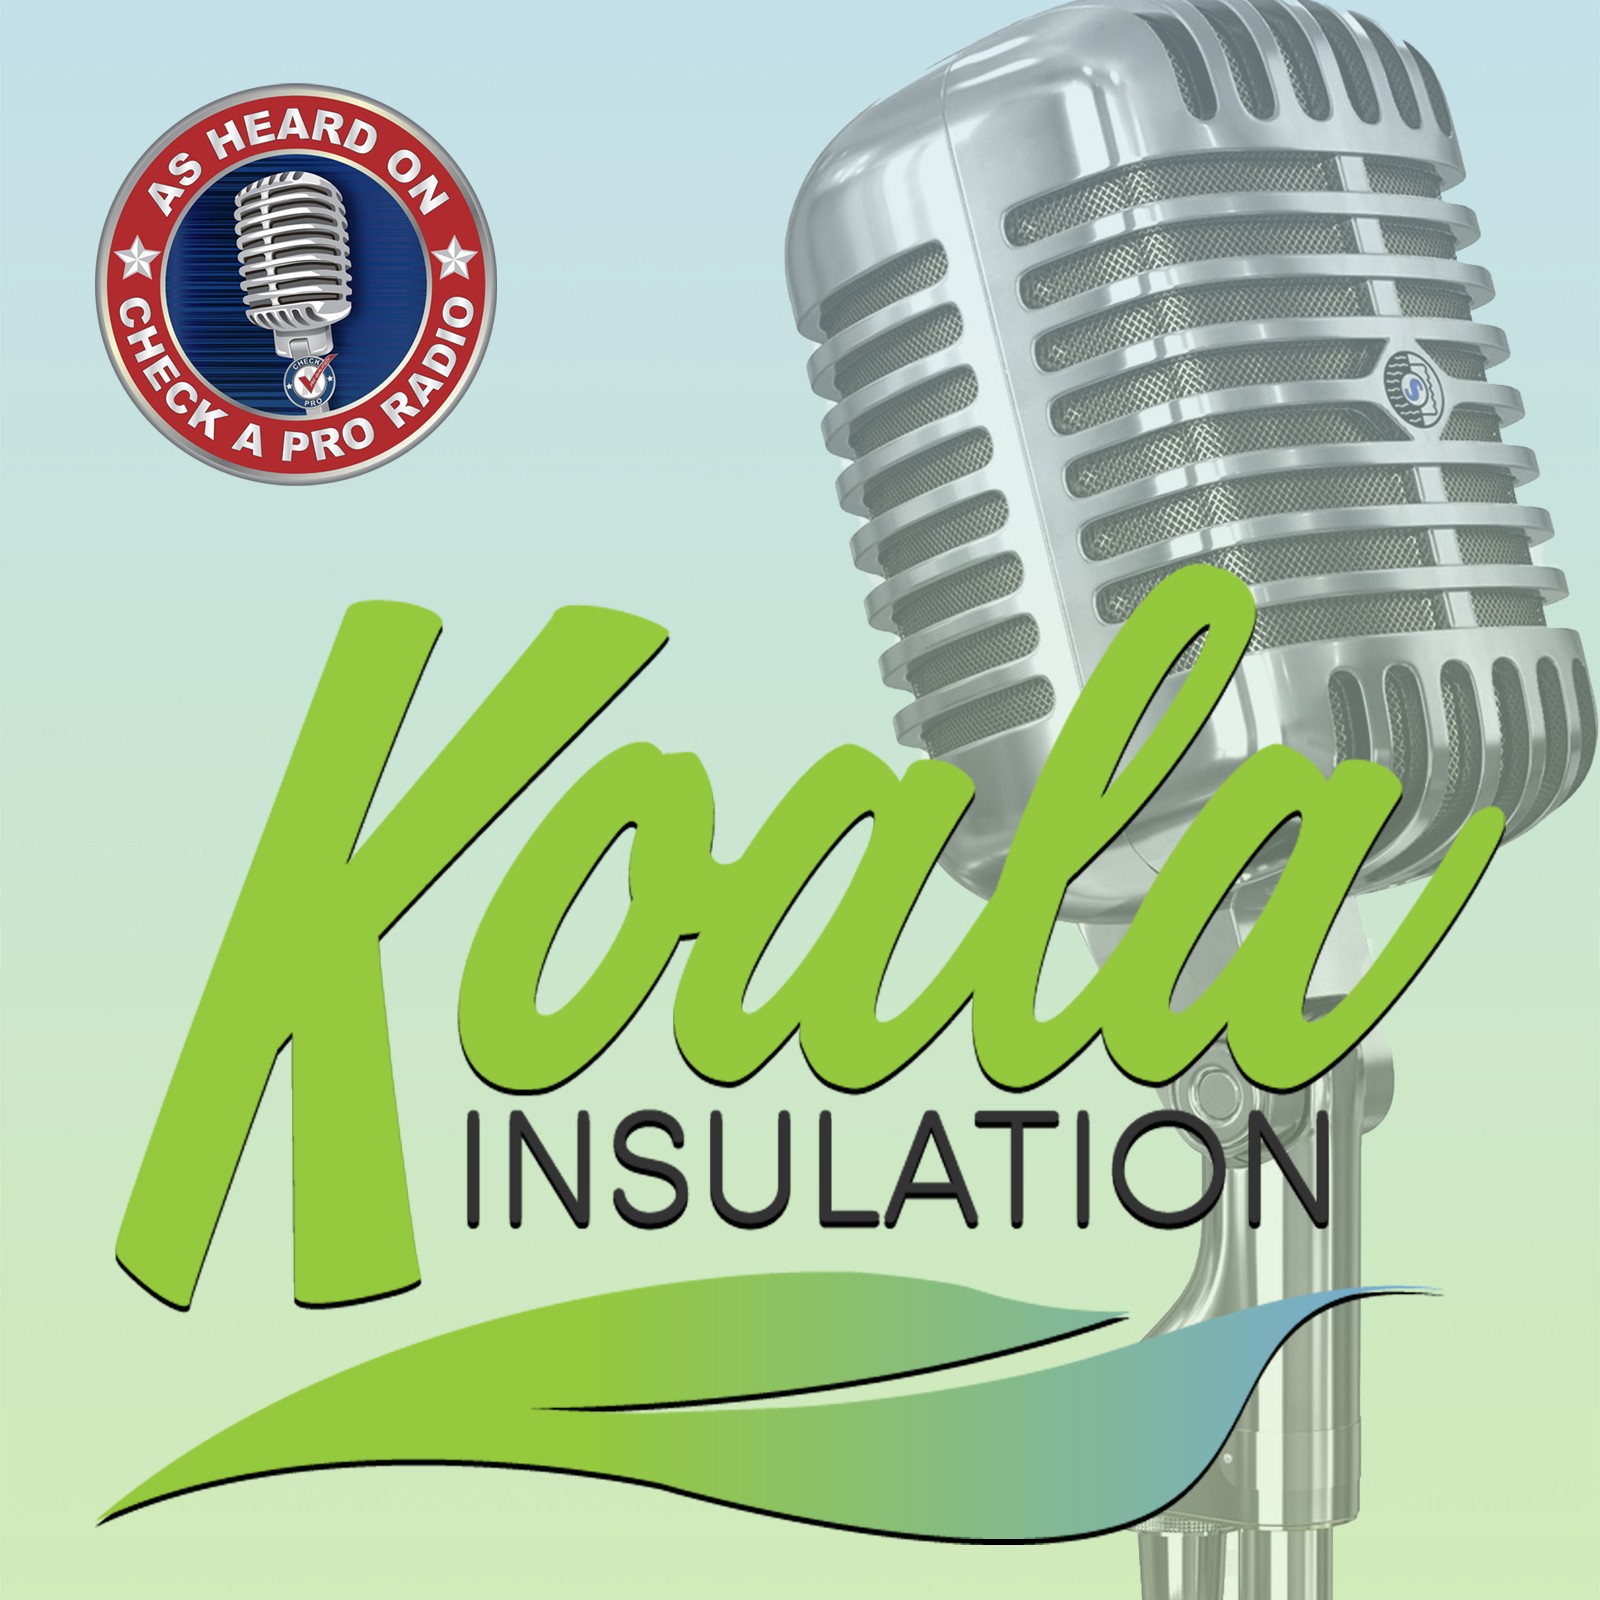 Check A Pro Radio Show Featuring Koala Insulation - July 24, 2021